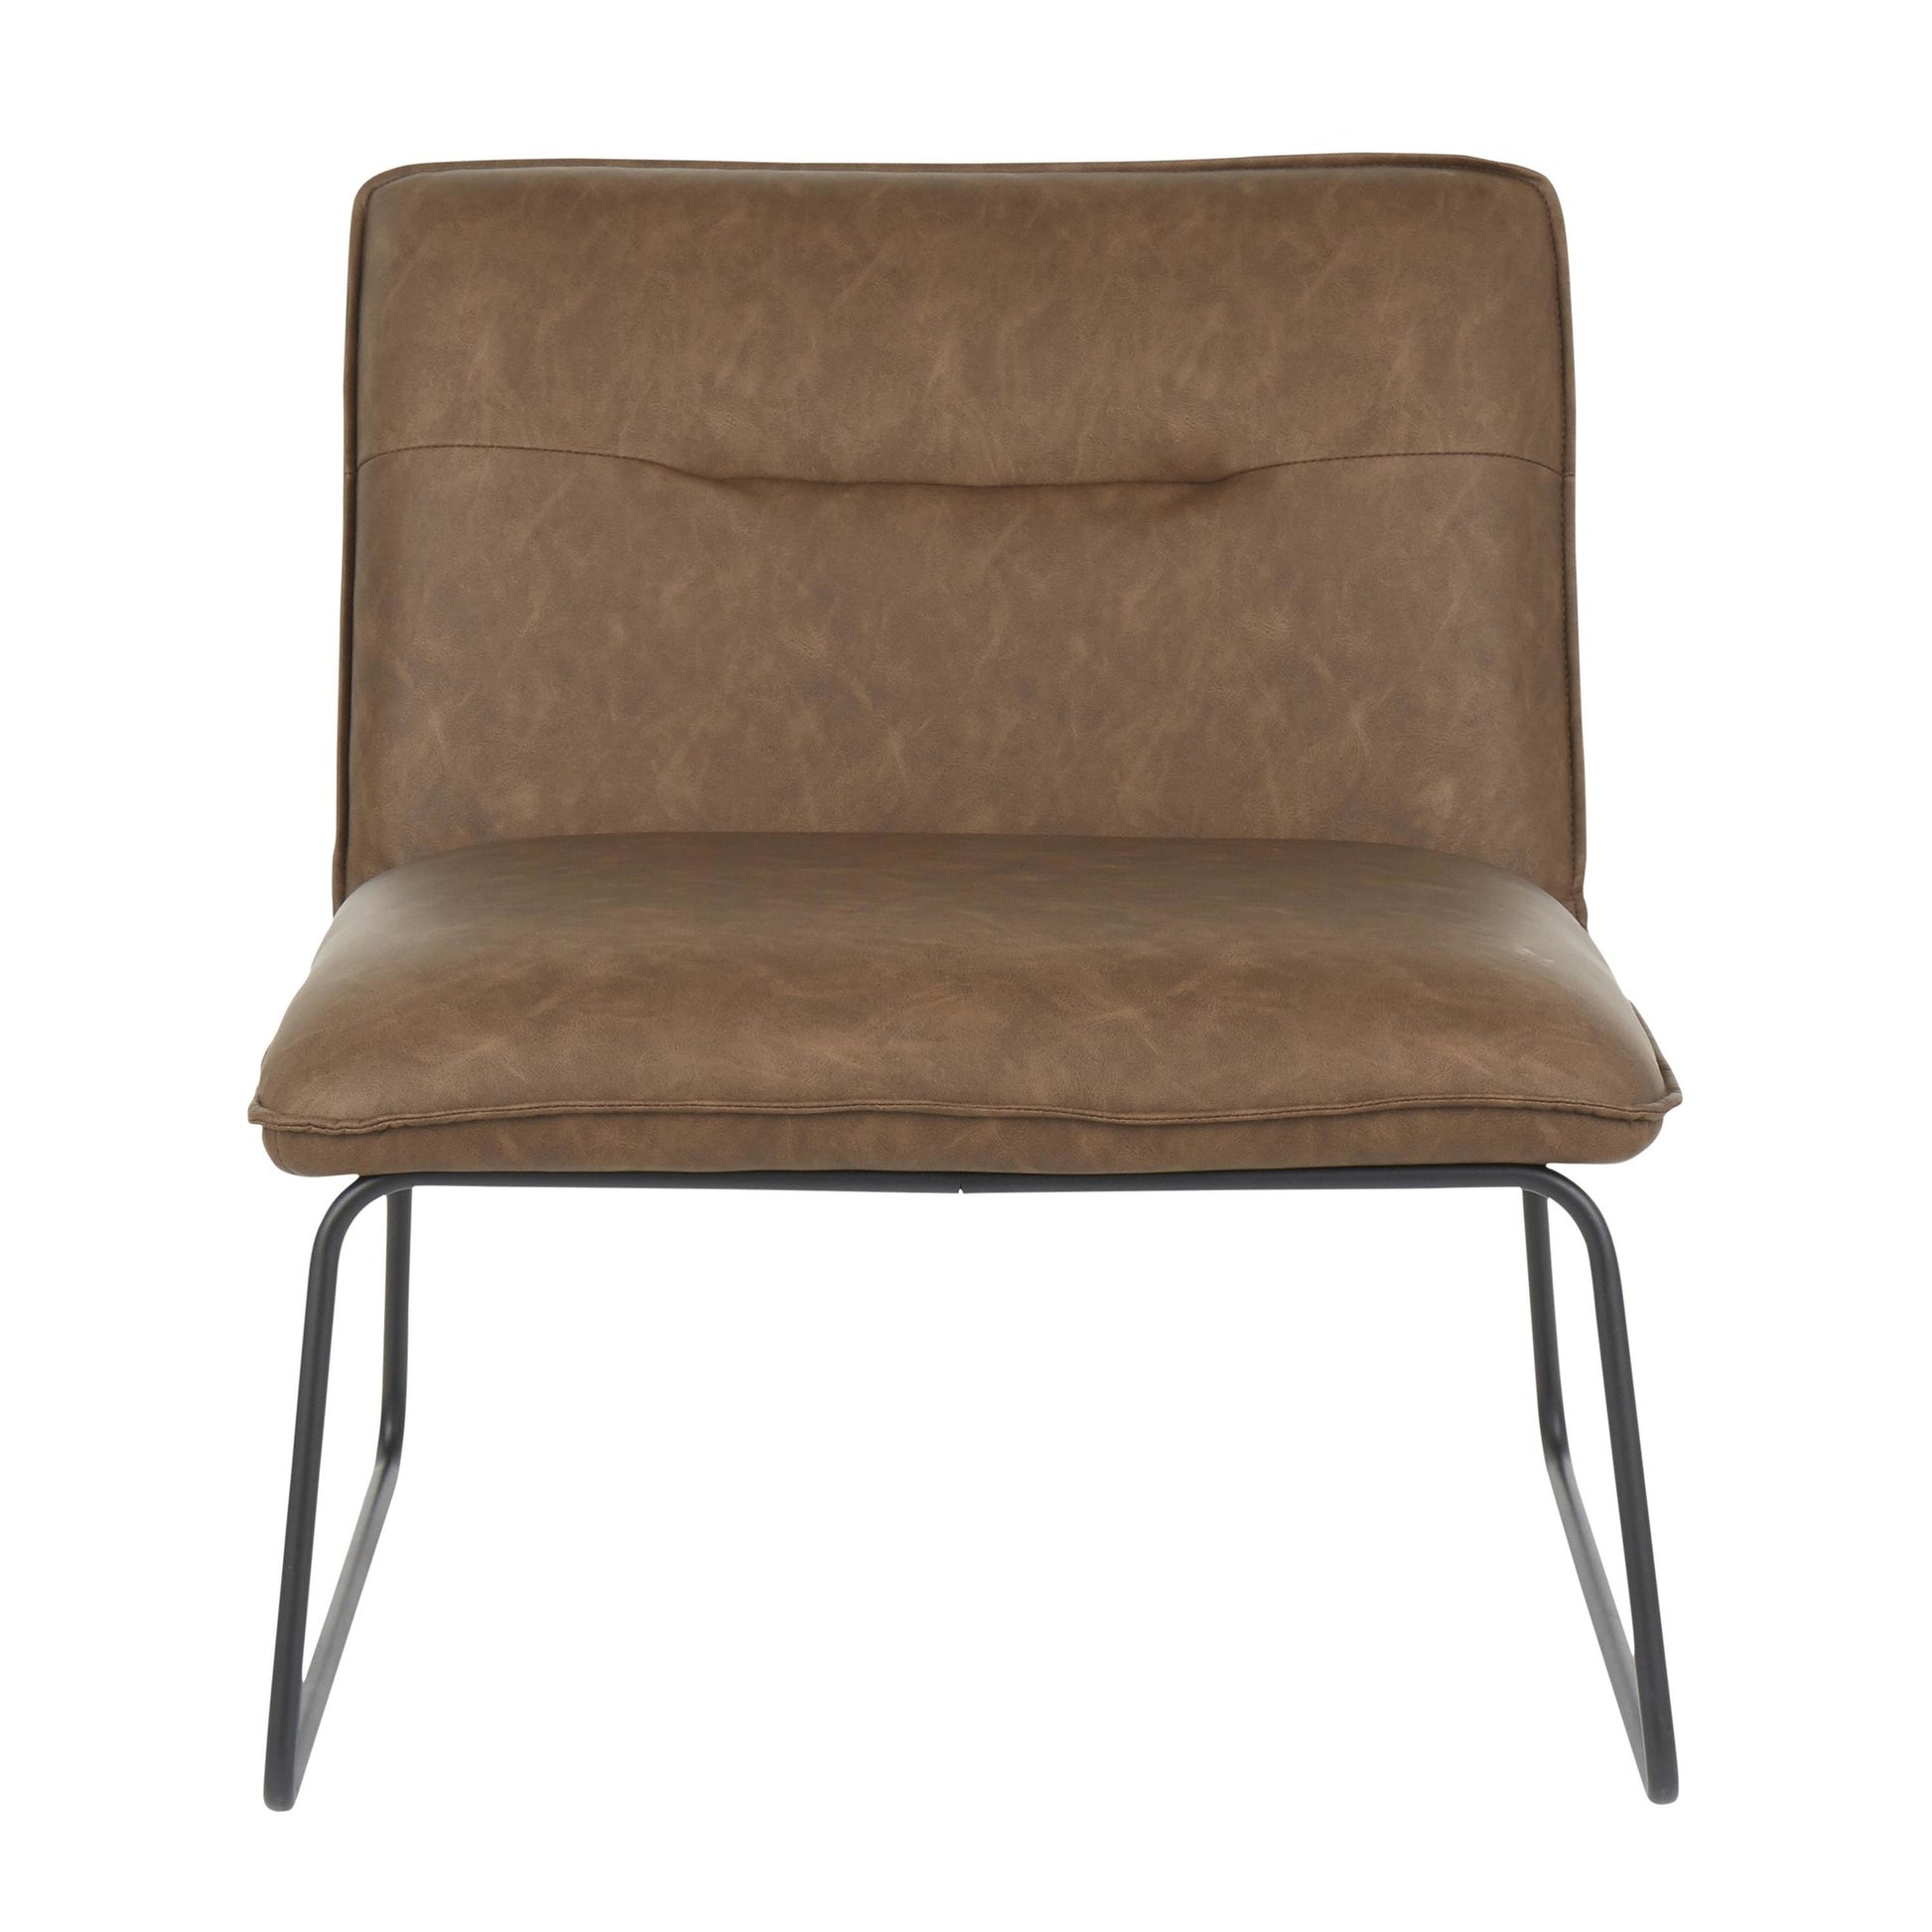 LumiSource Casper Accent Chair-9